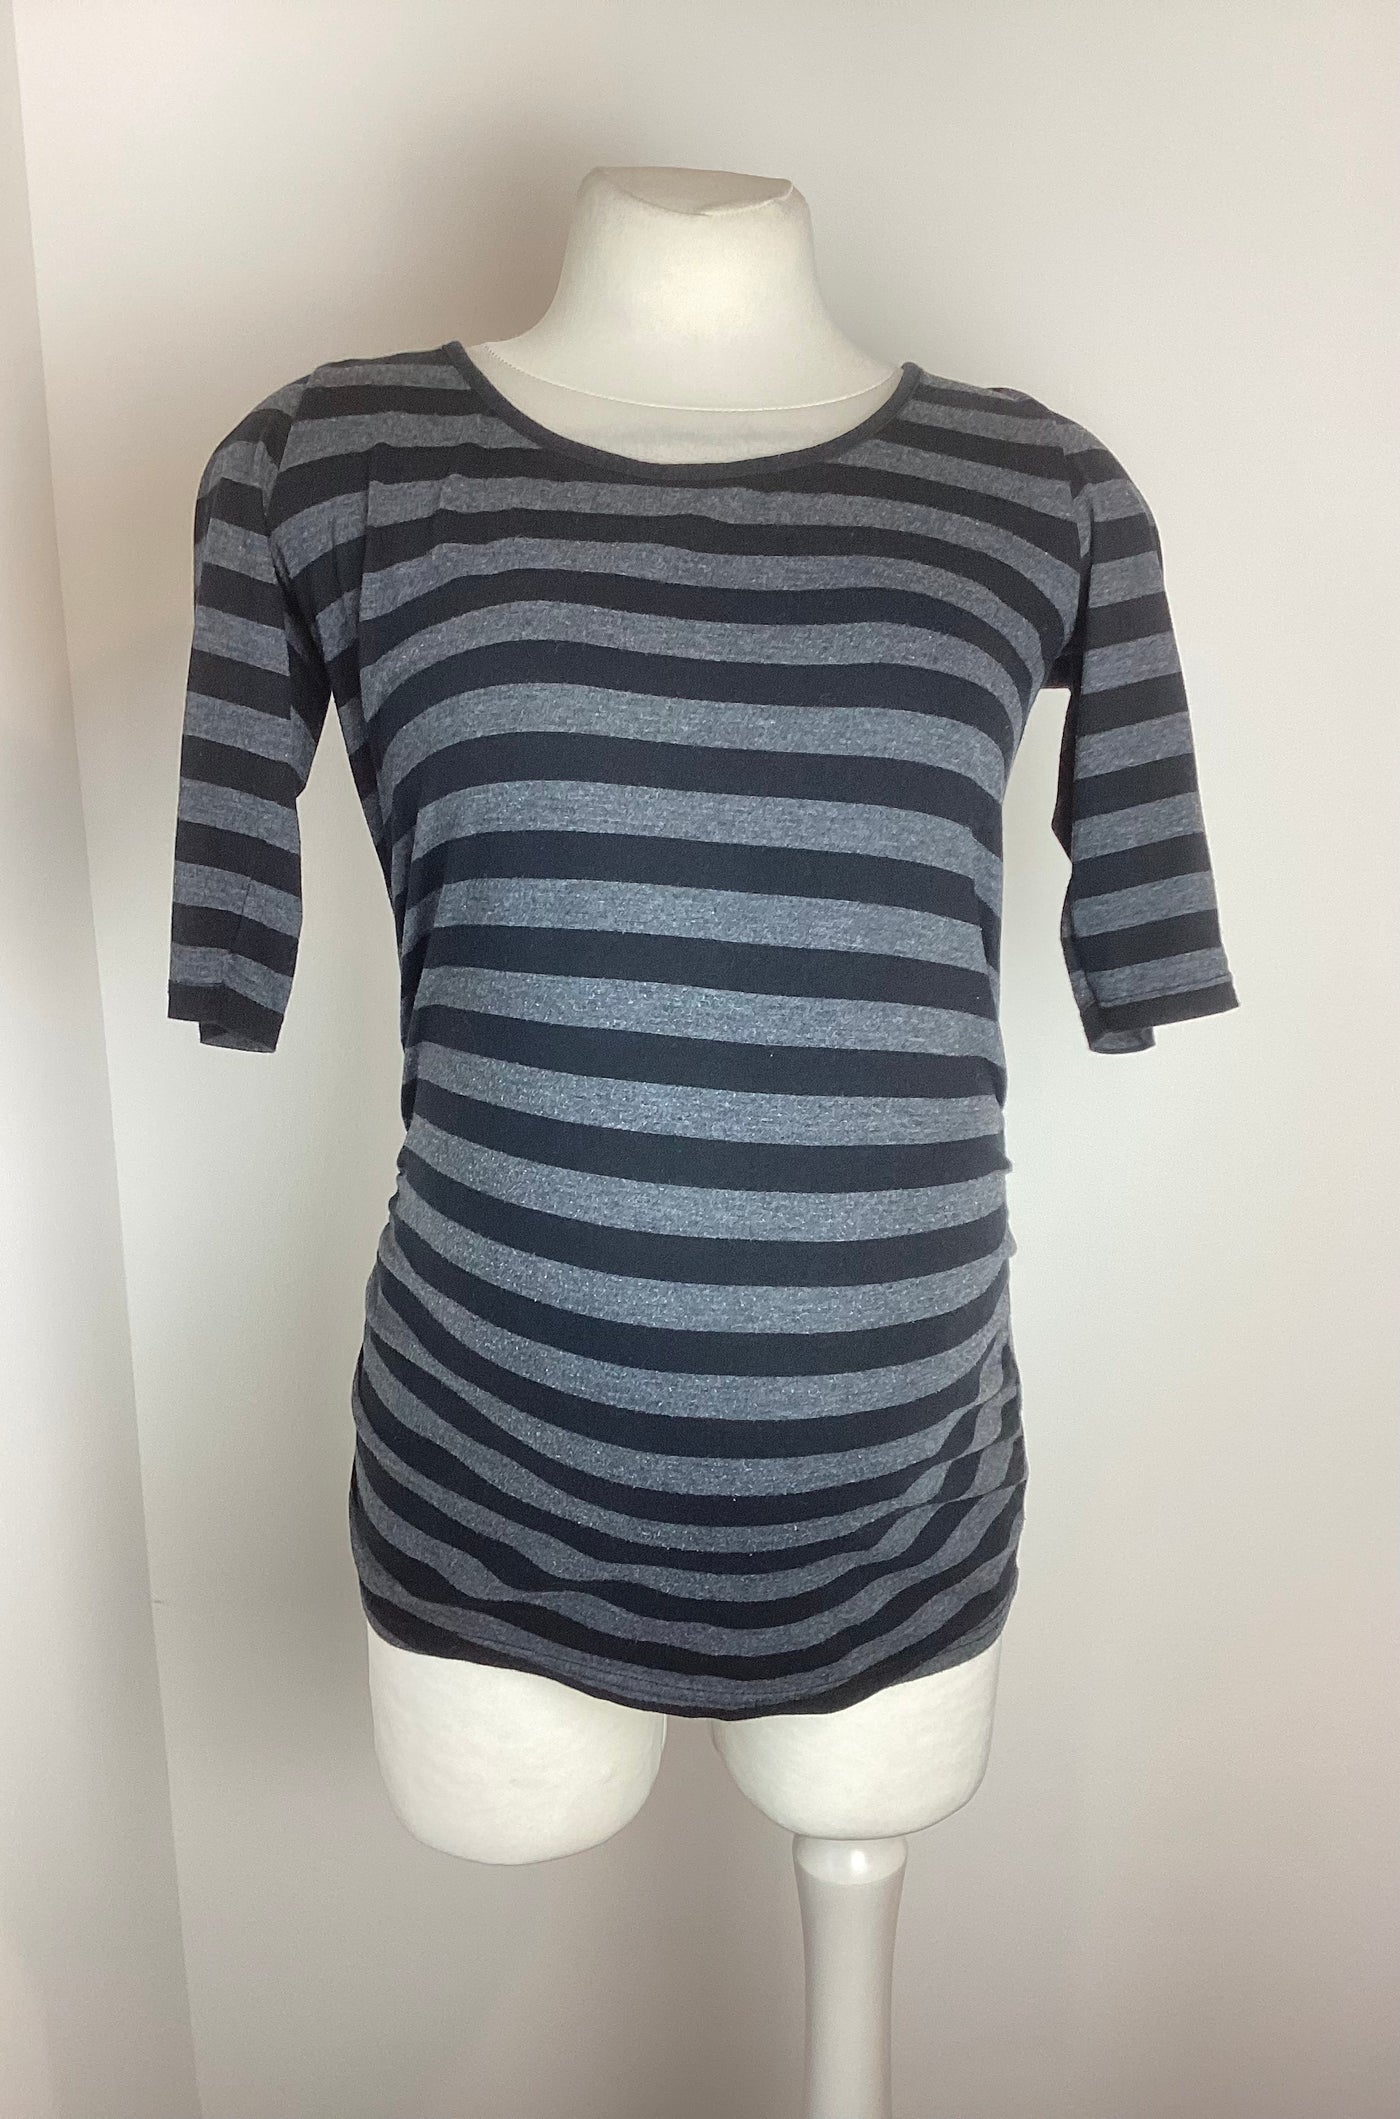 Dorothy Perkins Maternity black & grey stripe 3/4 sleeved top - Size 8